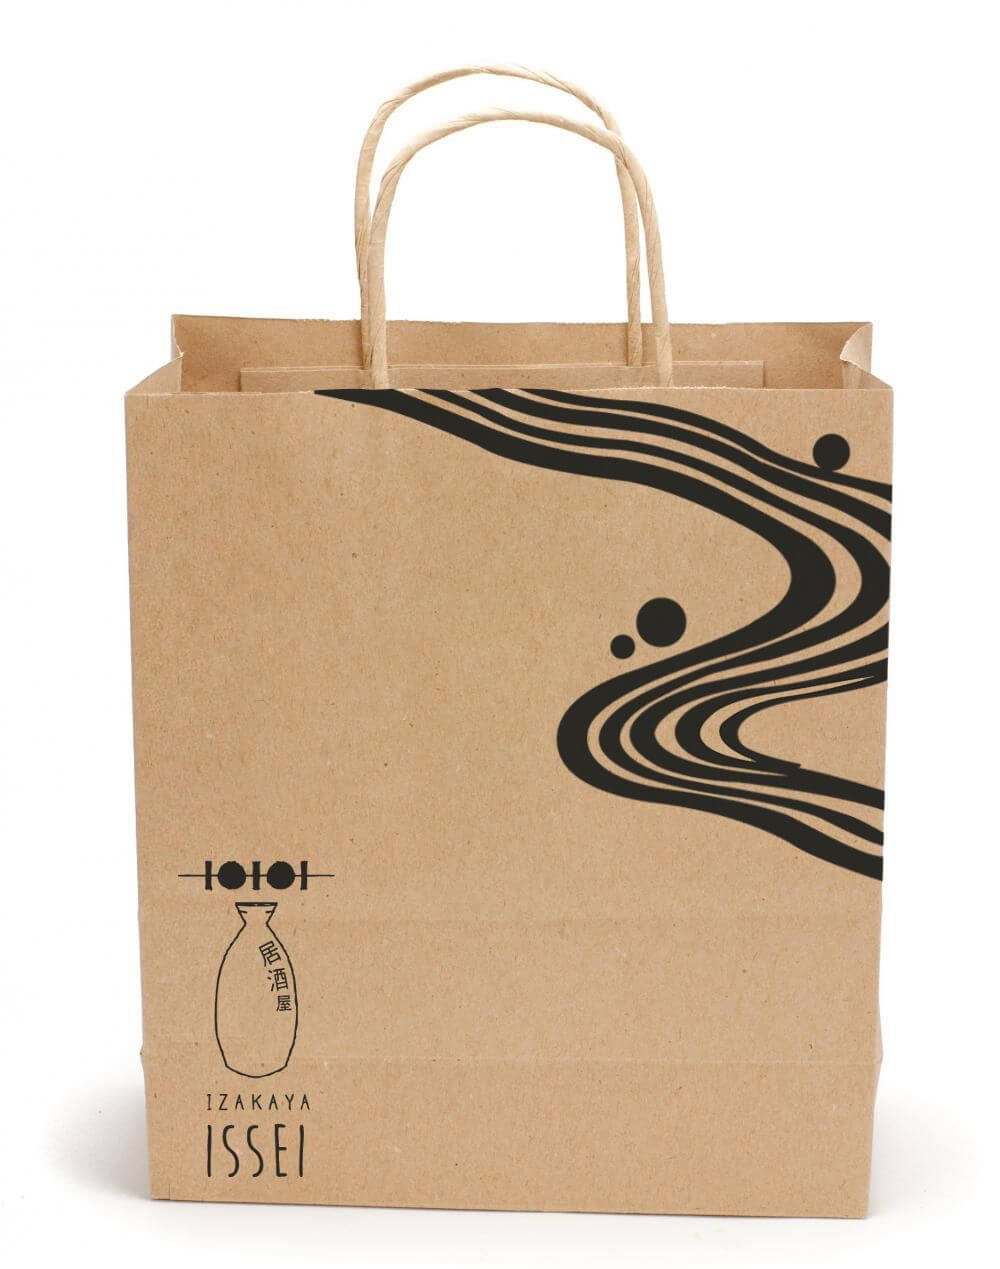 Wholesale Custom Printed Paper Shopping Bags